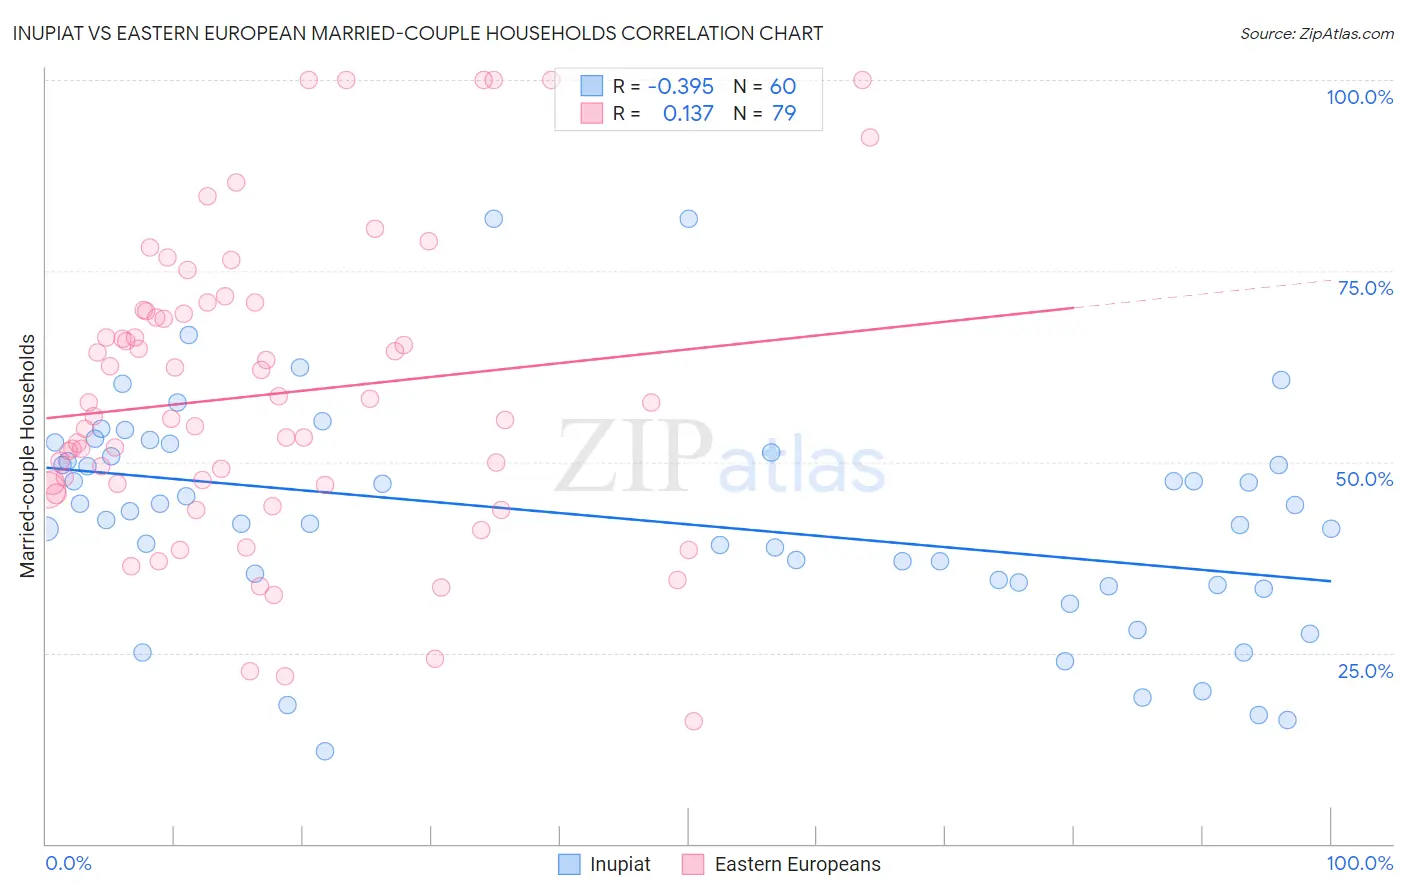 Inupiat vs Eastern European Married-couple Households